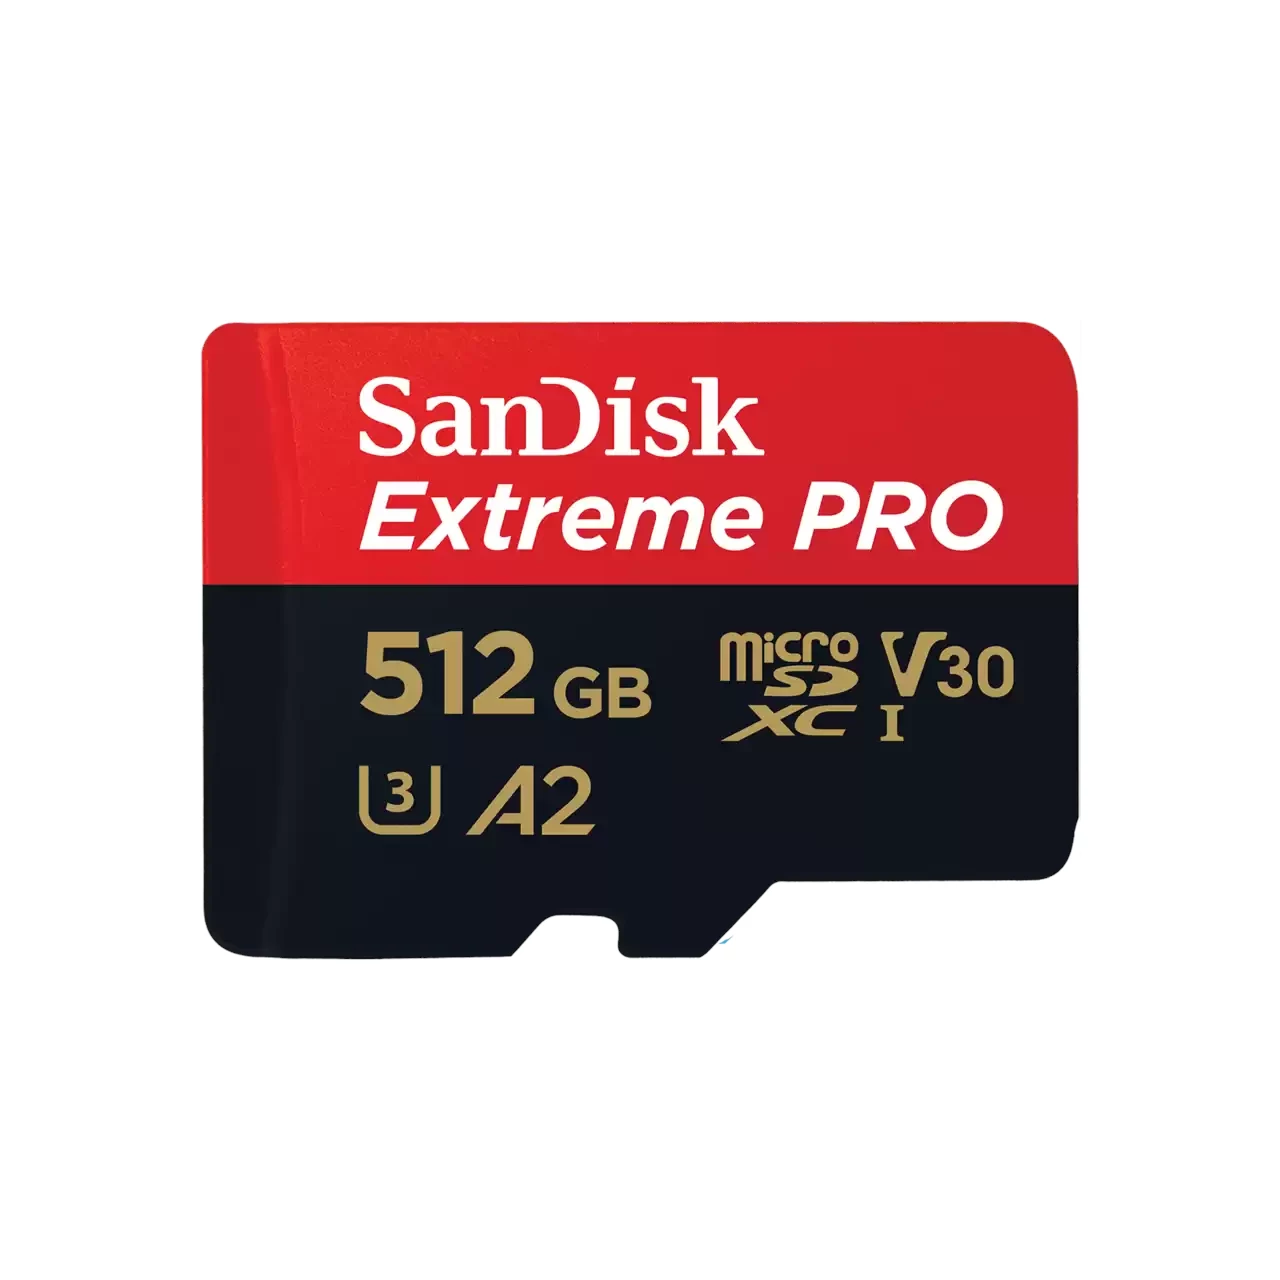 Sandisk Extreme Pro 512Gb MicroSDXC UHS-I 記憶卡 #SDSQXCD-512G